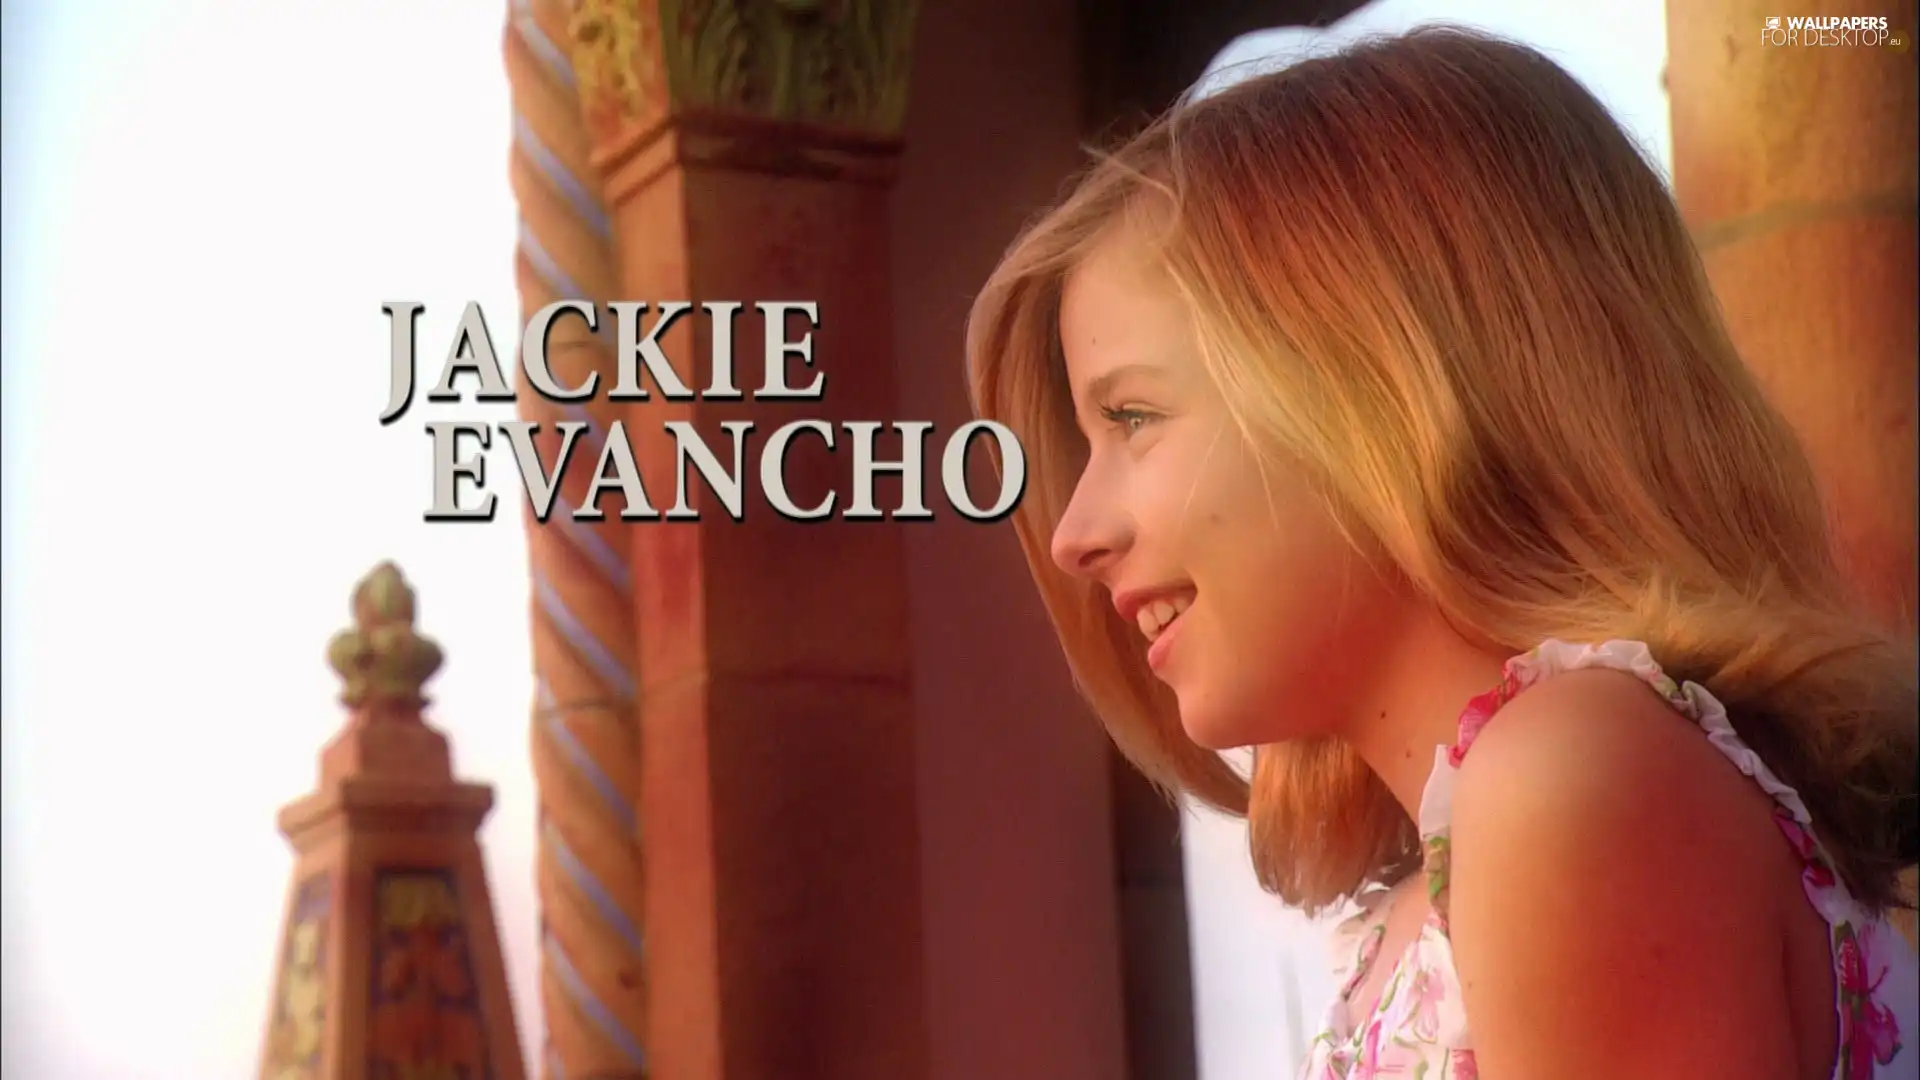 Jackie Evancho, singer